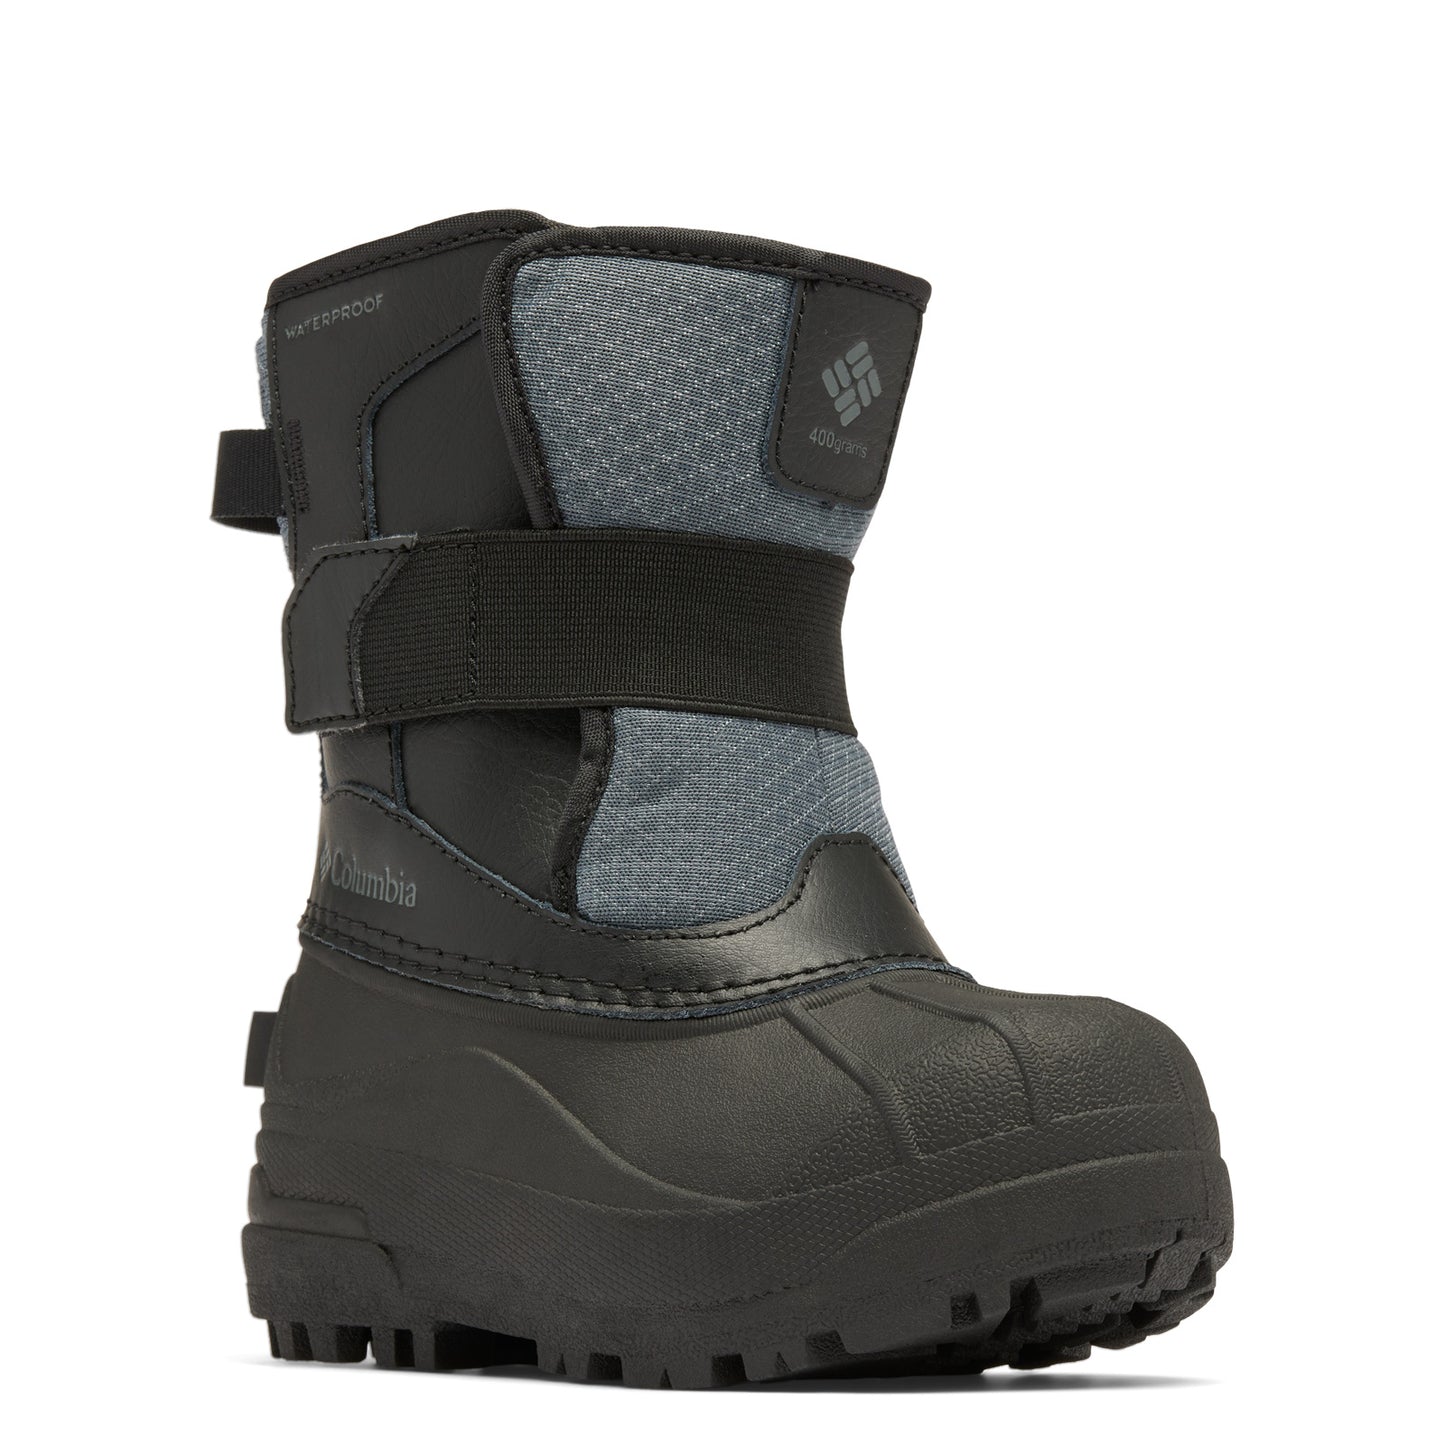 Peltz Shoes  Kid's Columbia Bugaboot Snow Boot – Toddler & Little Kid BLACK GREY 2020152-010